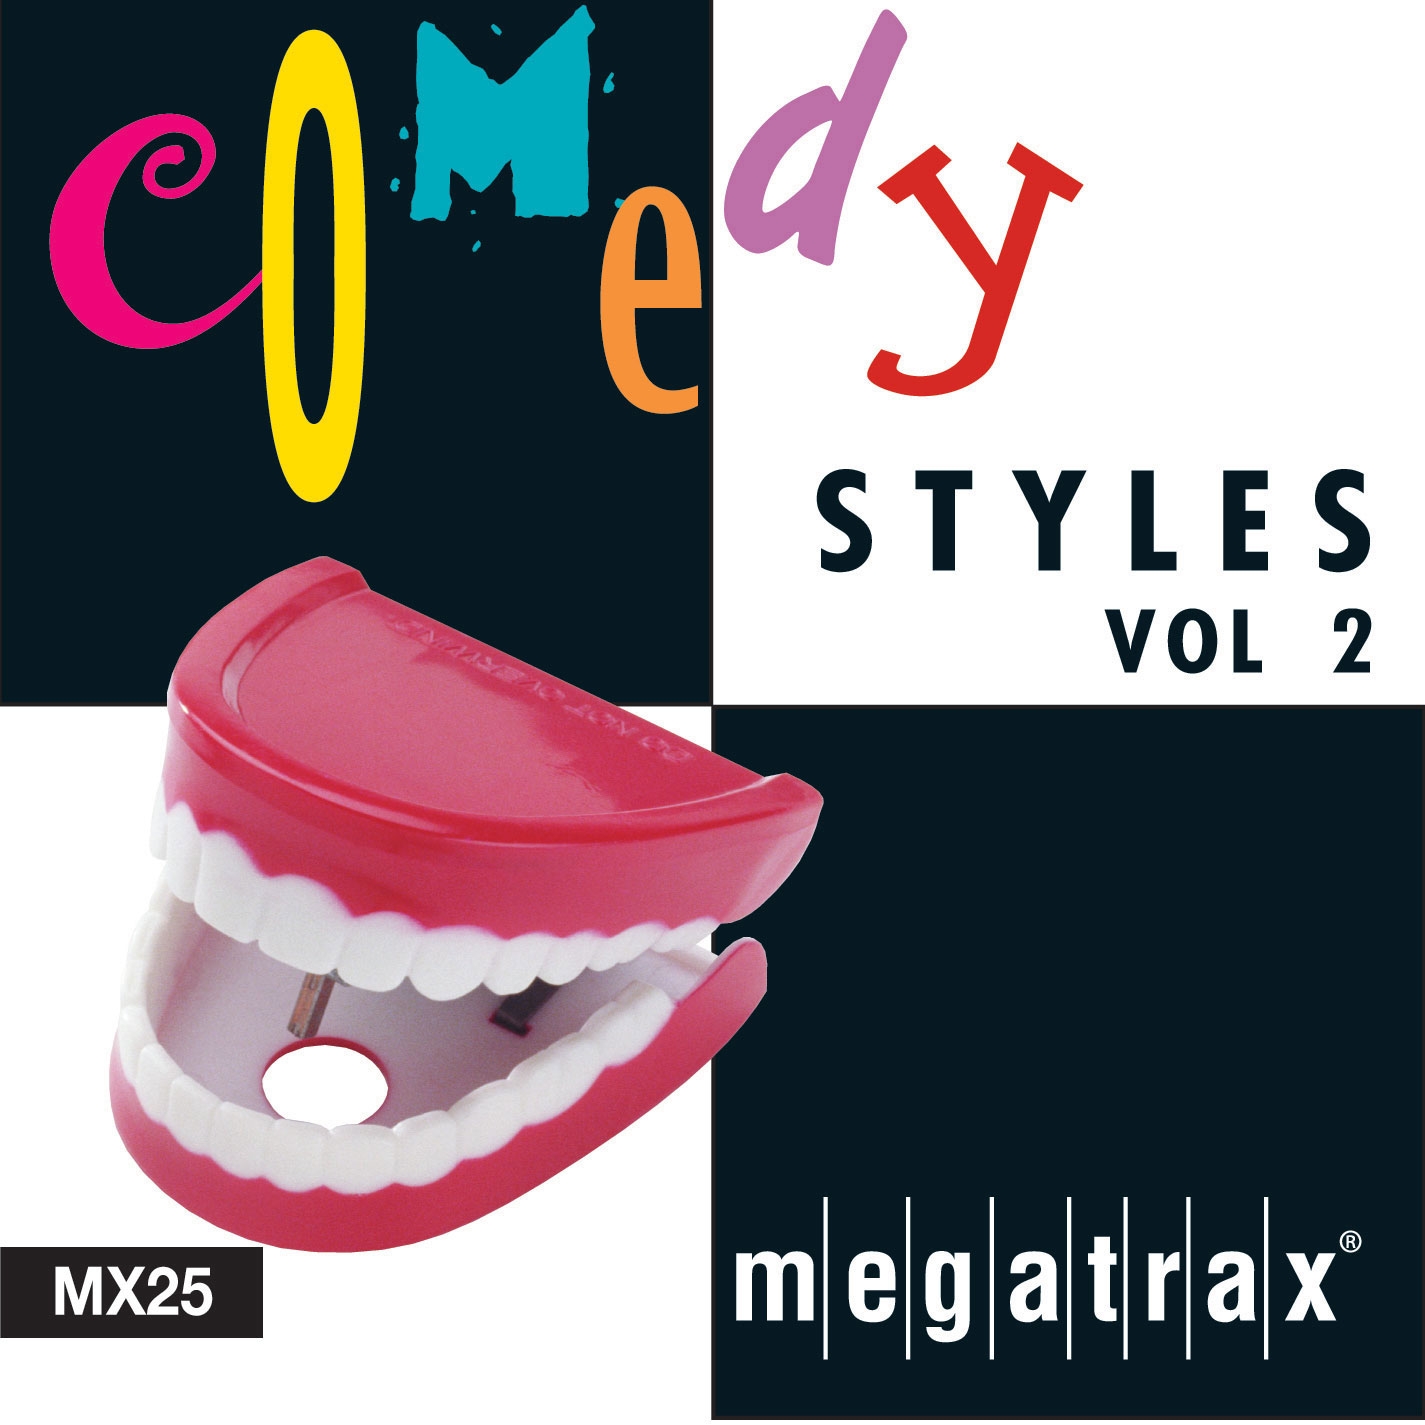 Comedy Styles Vol. 5 - Megatrax